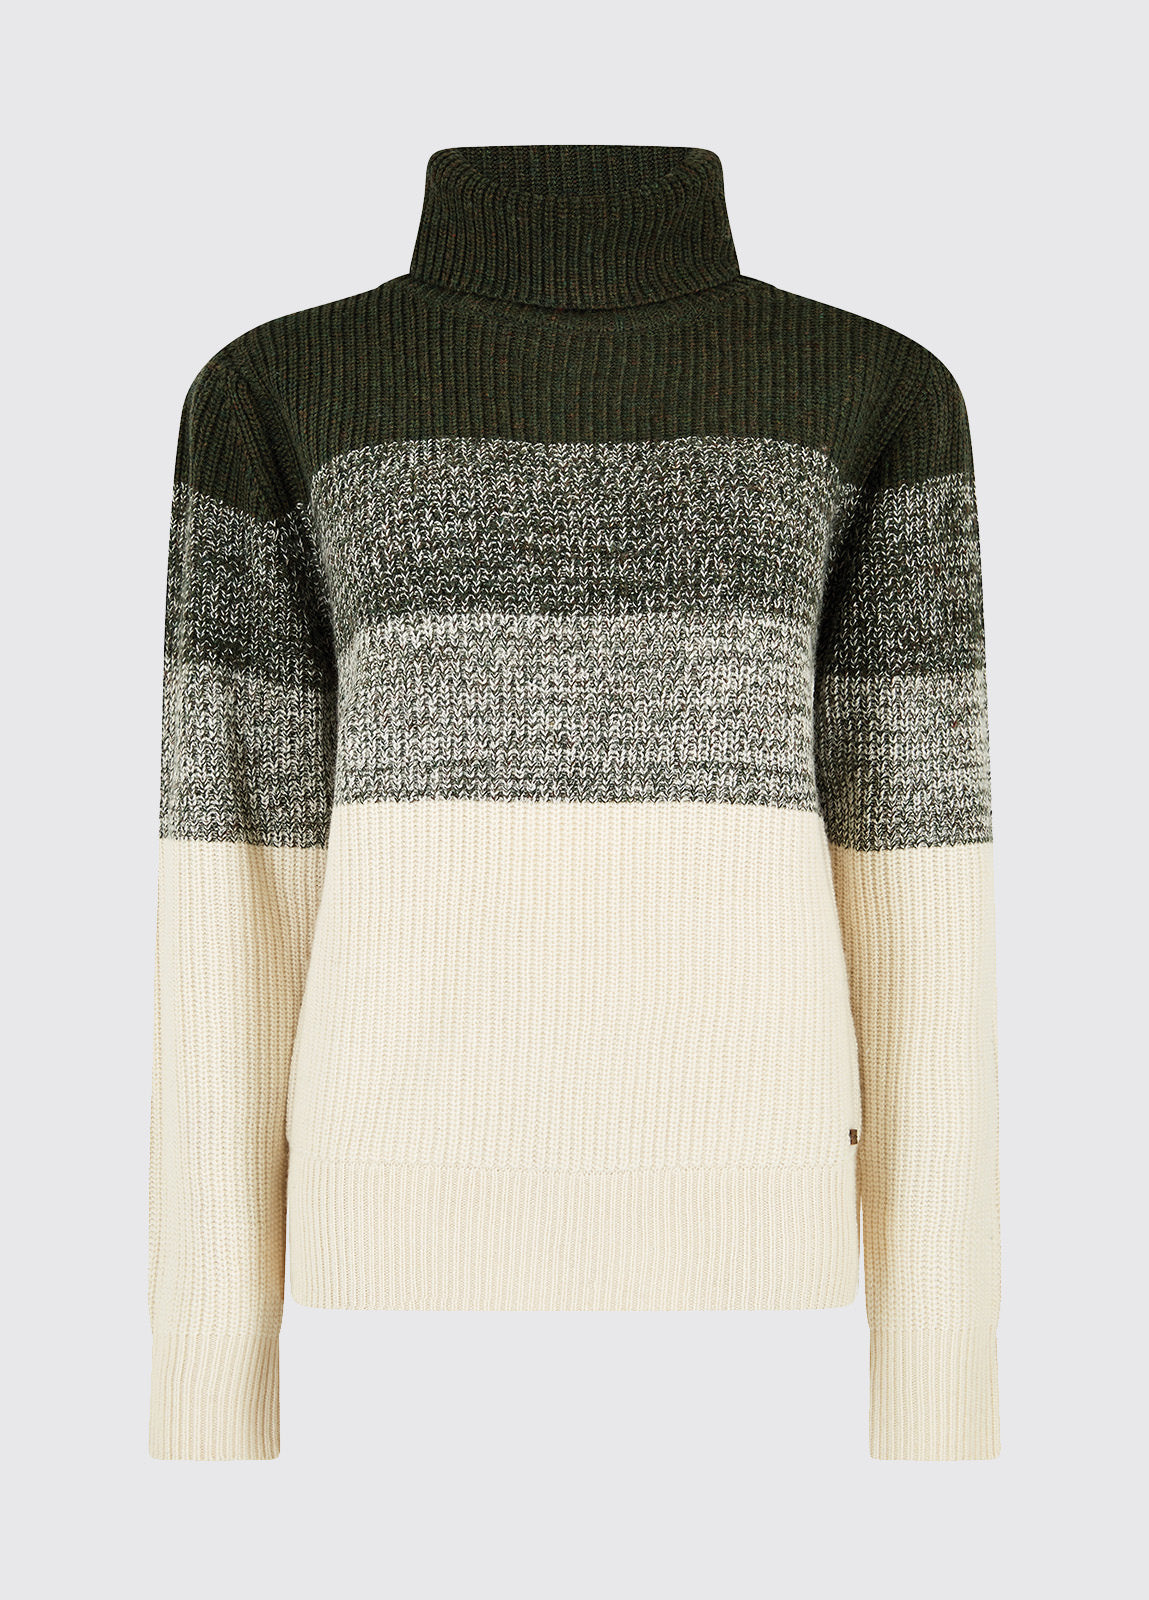 Dubarry Killossery Sweater - Olive